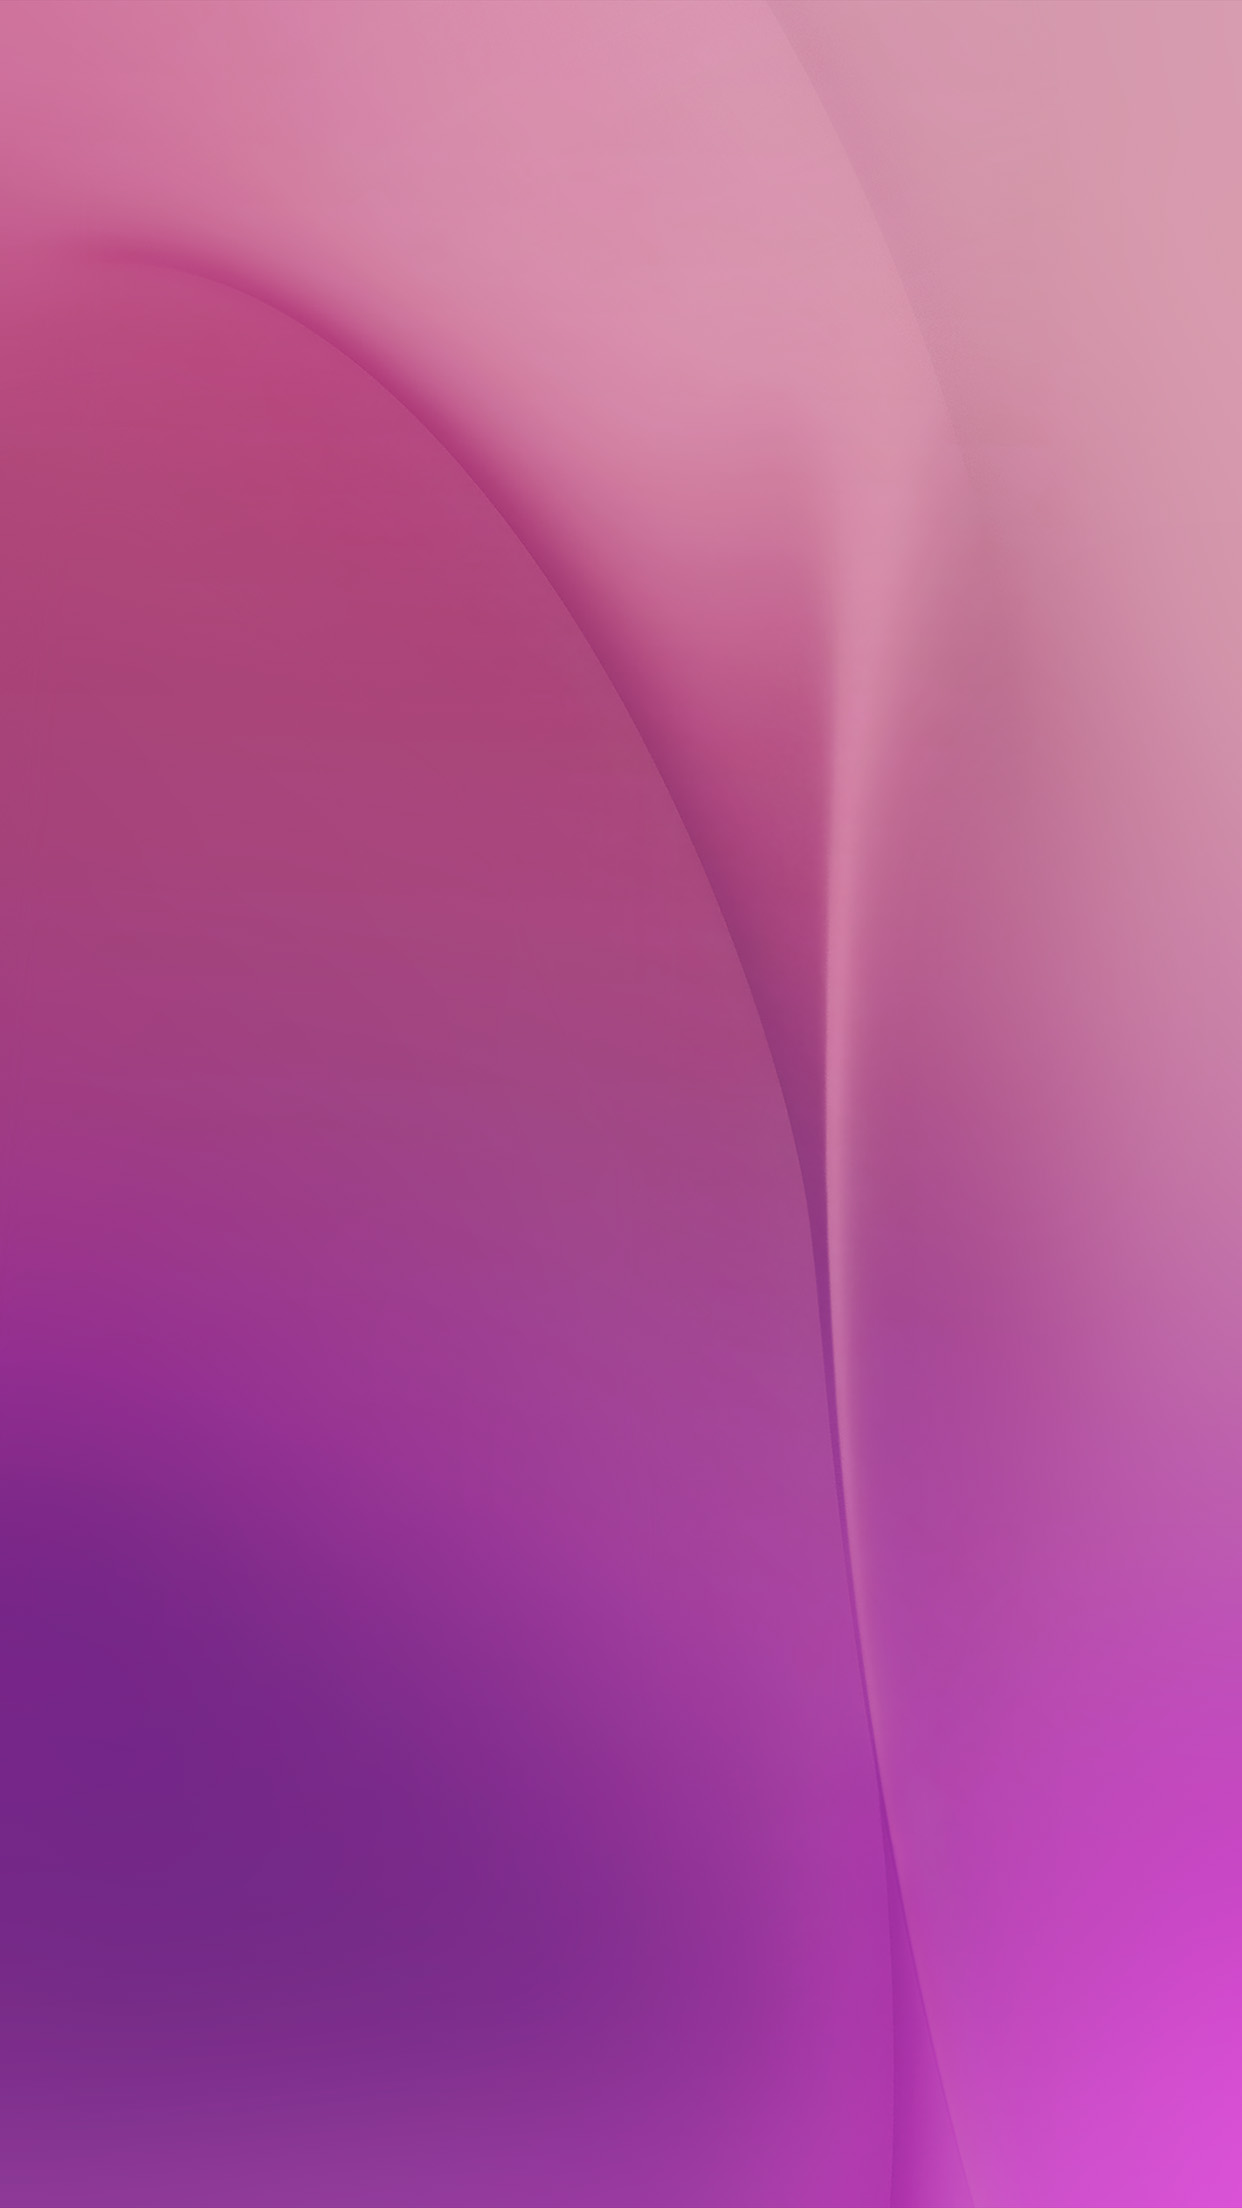 Deep Ocean Abstract Digital Soft Pink Pattern Android wallpaper